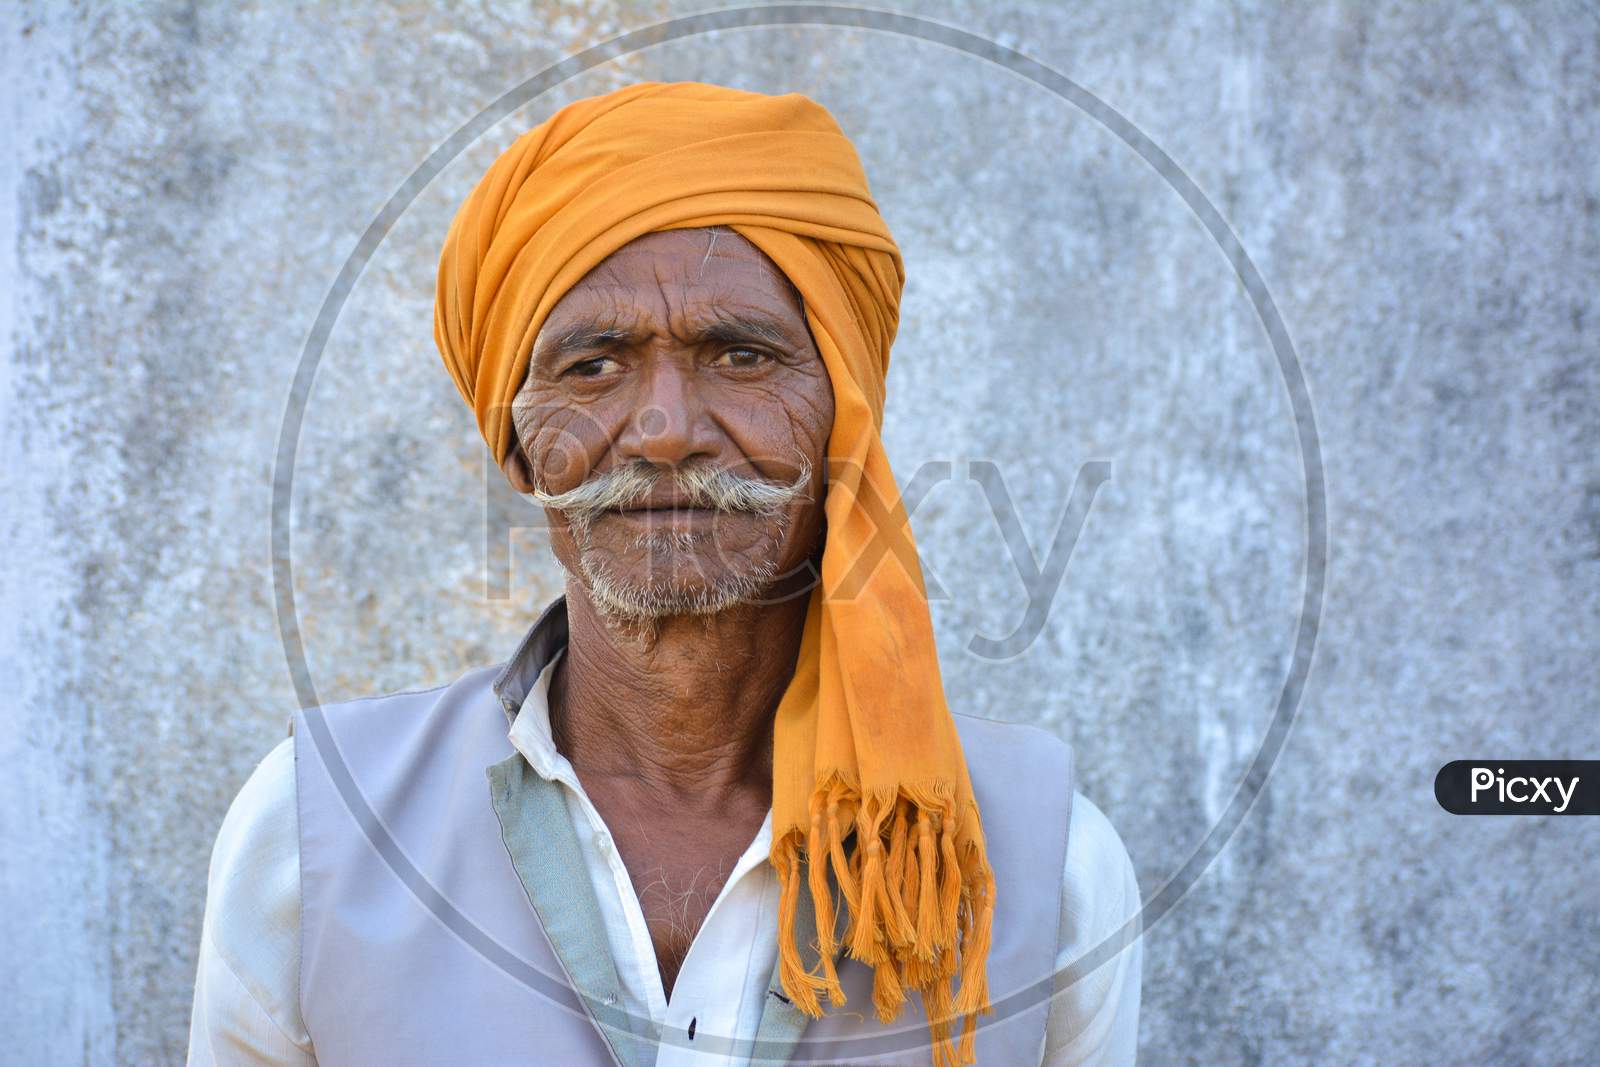 TIKAMGARH, MADHYA PRADESH, INDIA - NOVEMBER 23, 2020: Portrait of unidentified Indian old man at their village.